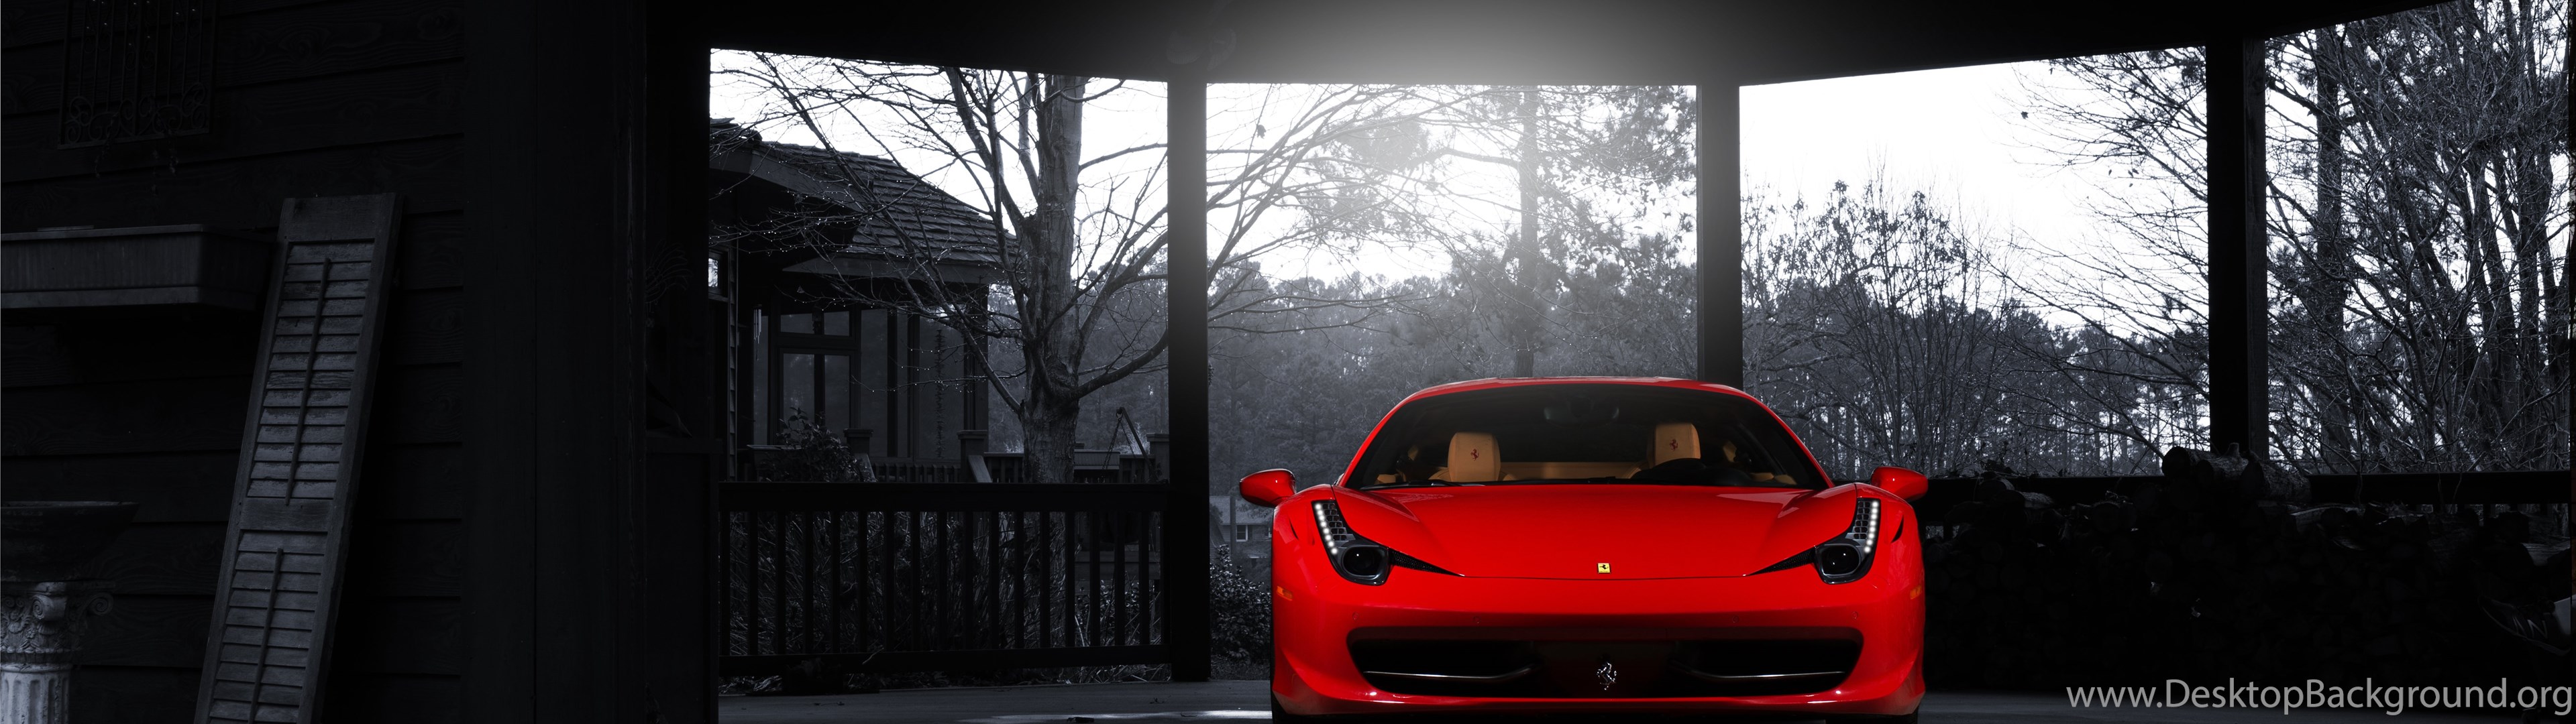 27 Ferrari 458 Hd Wallpapers Desktop Background